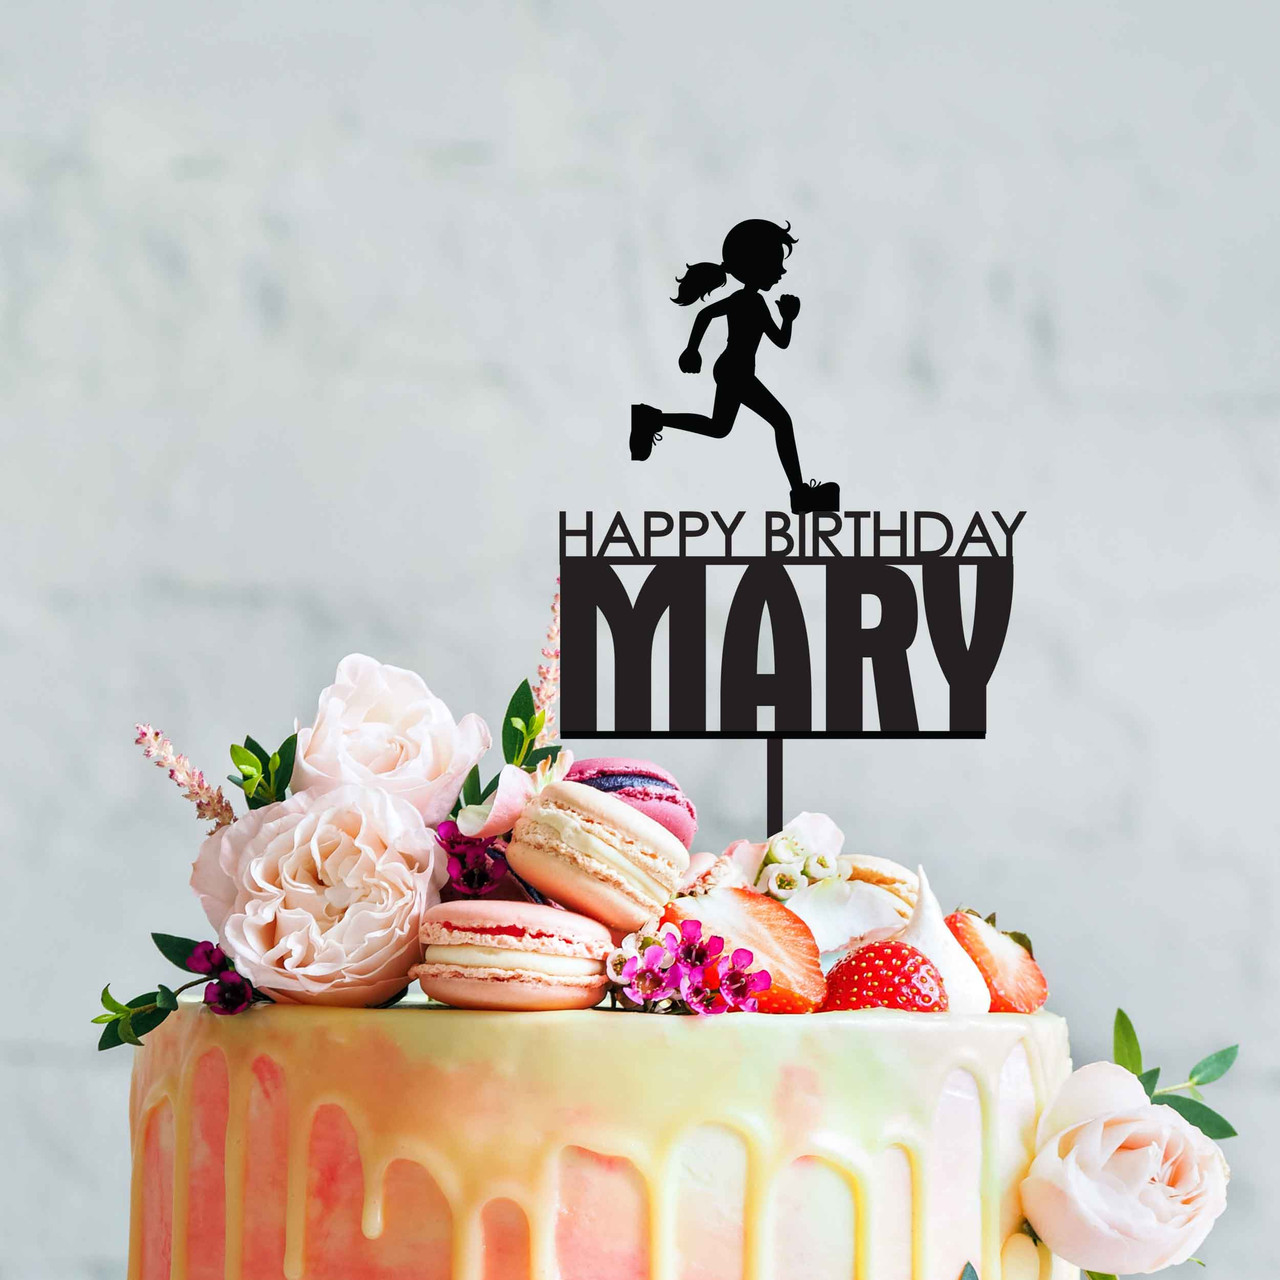 Ladies Jogging Happy Birthday Cake Topper - Personalised Female Athlete  Running Happy Birthday Cake Decoration - Made in Australia